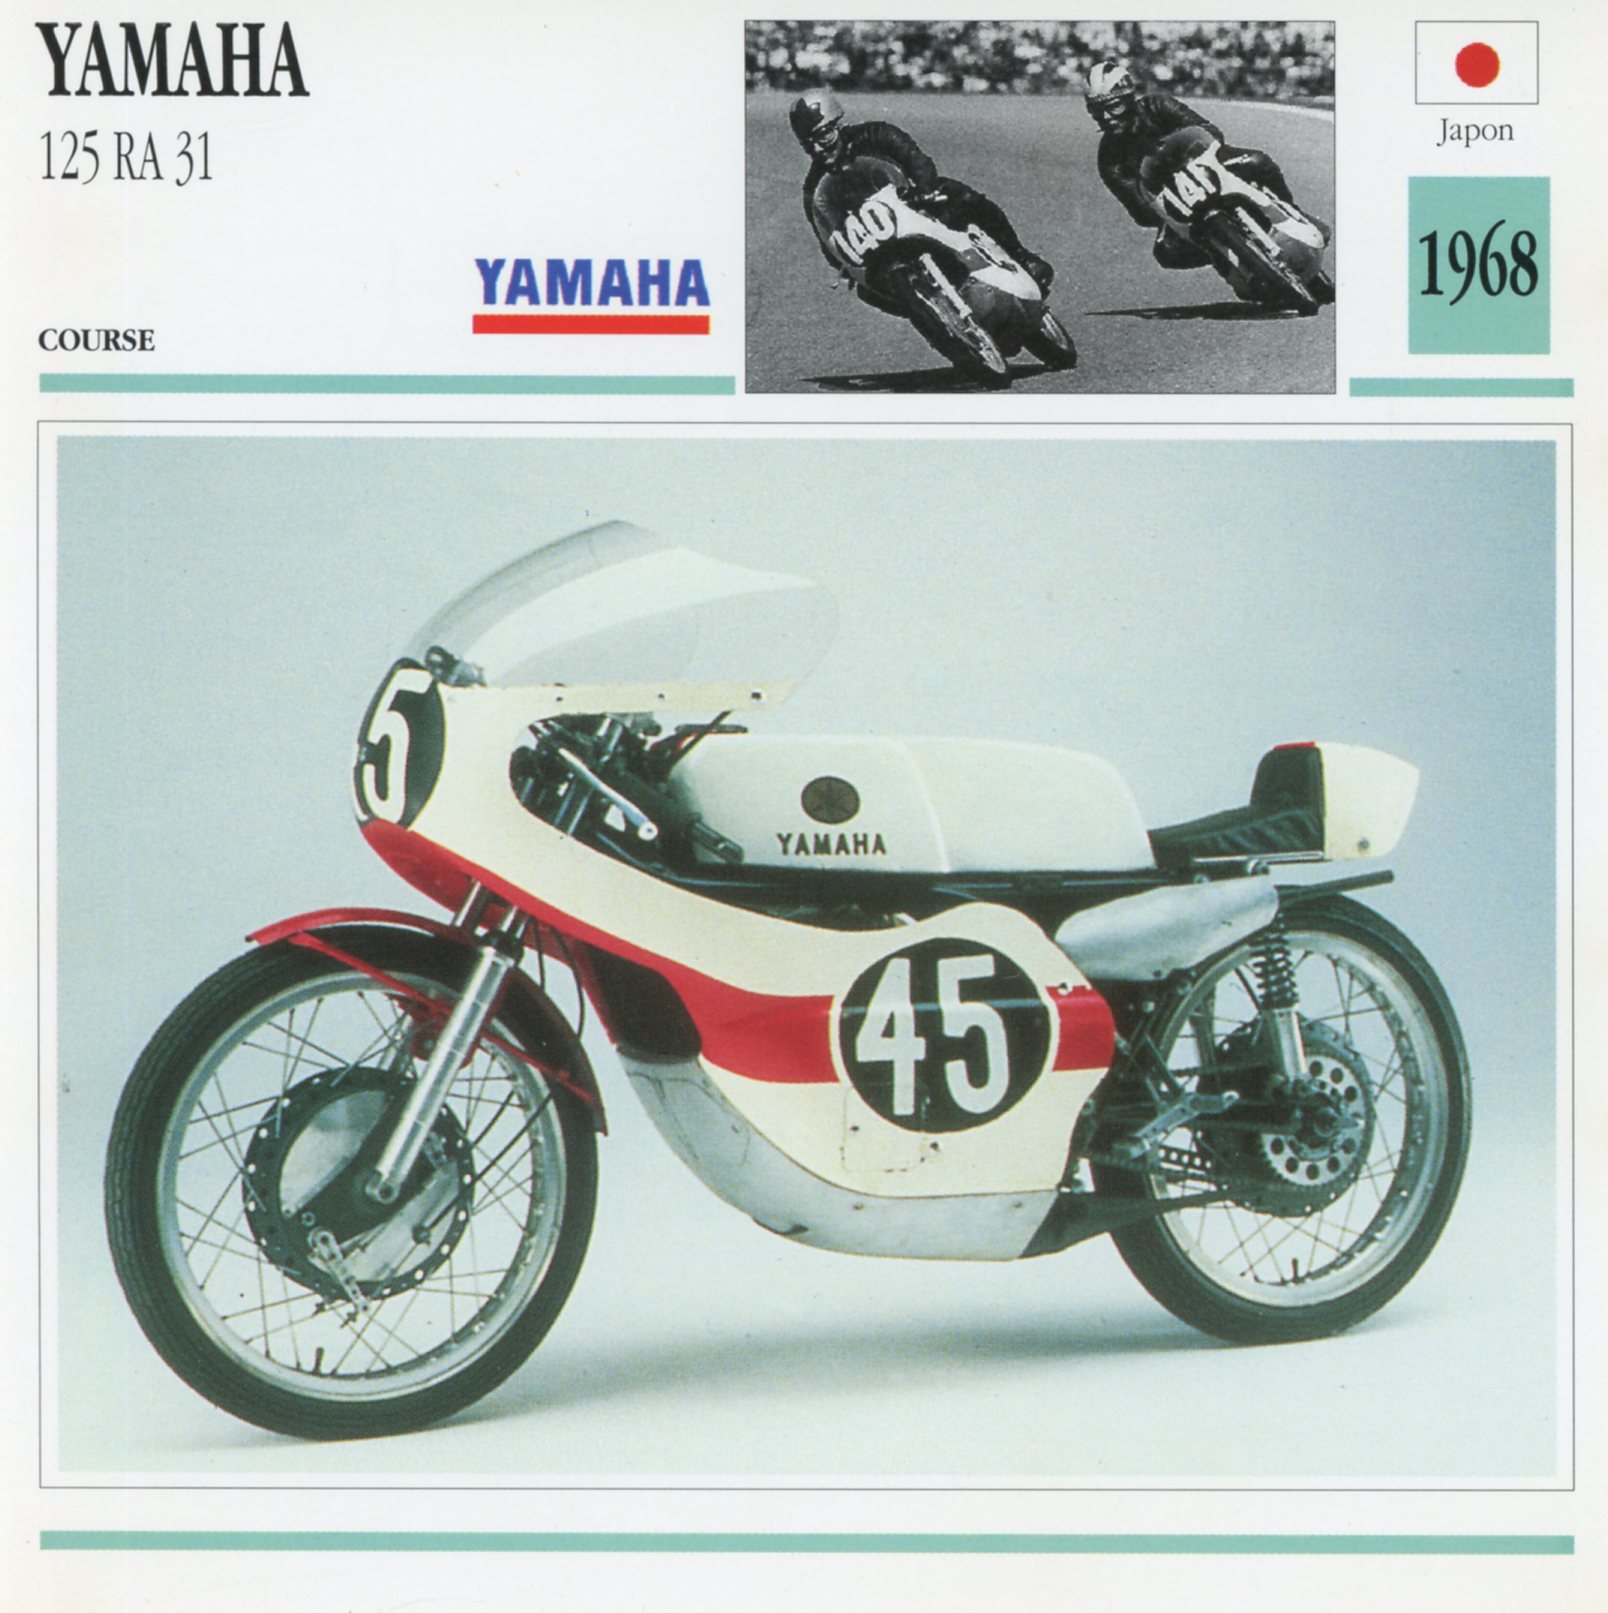 FICHE-MOTO-YAMAHA-125-RA31-1968-LEMASTERBROCKERS-littérature-brochure